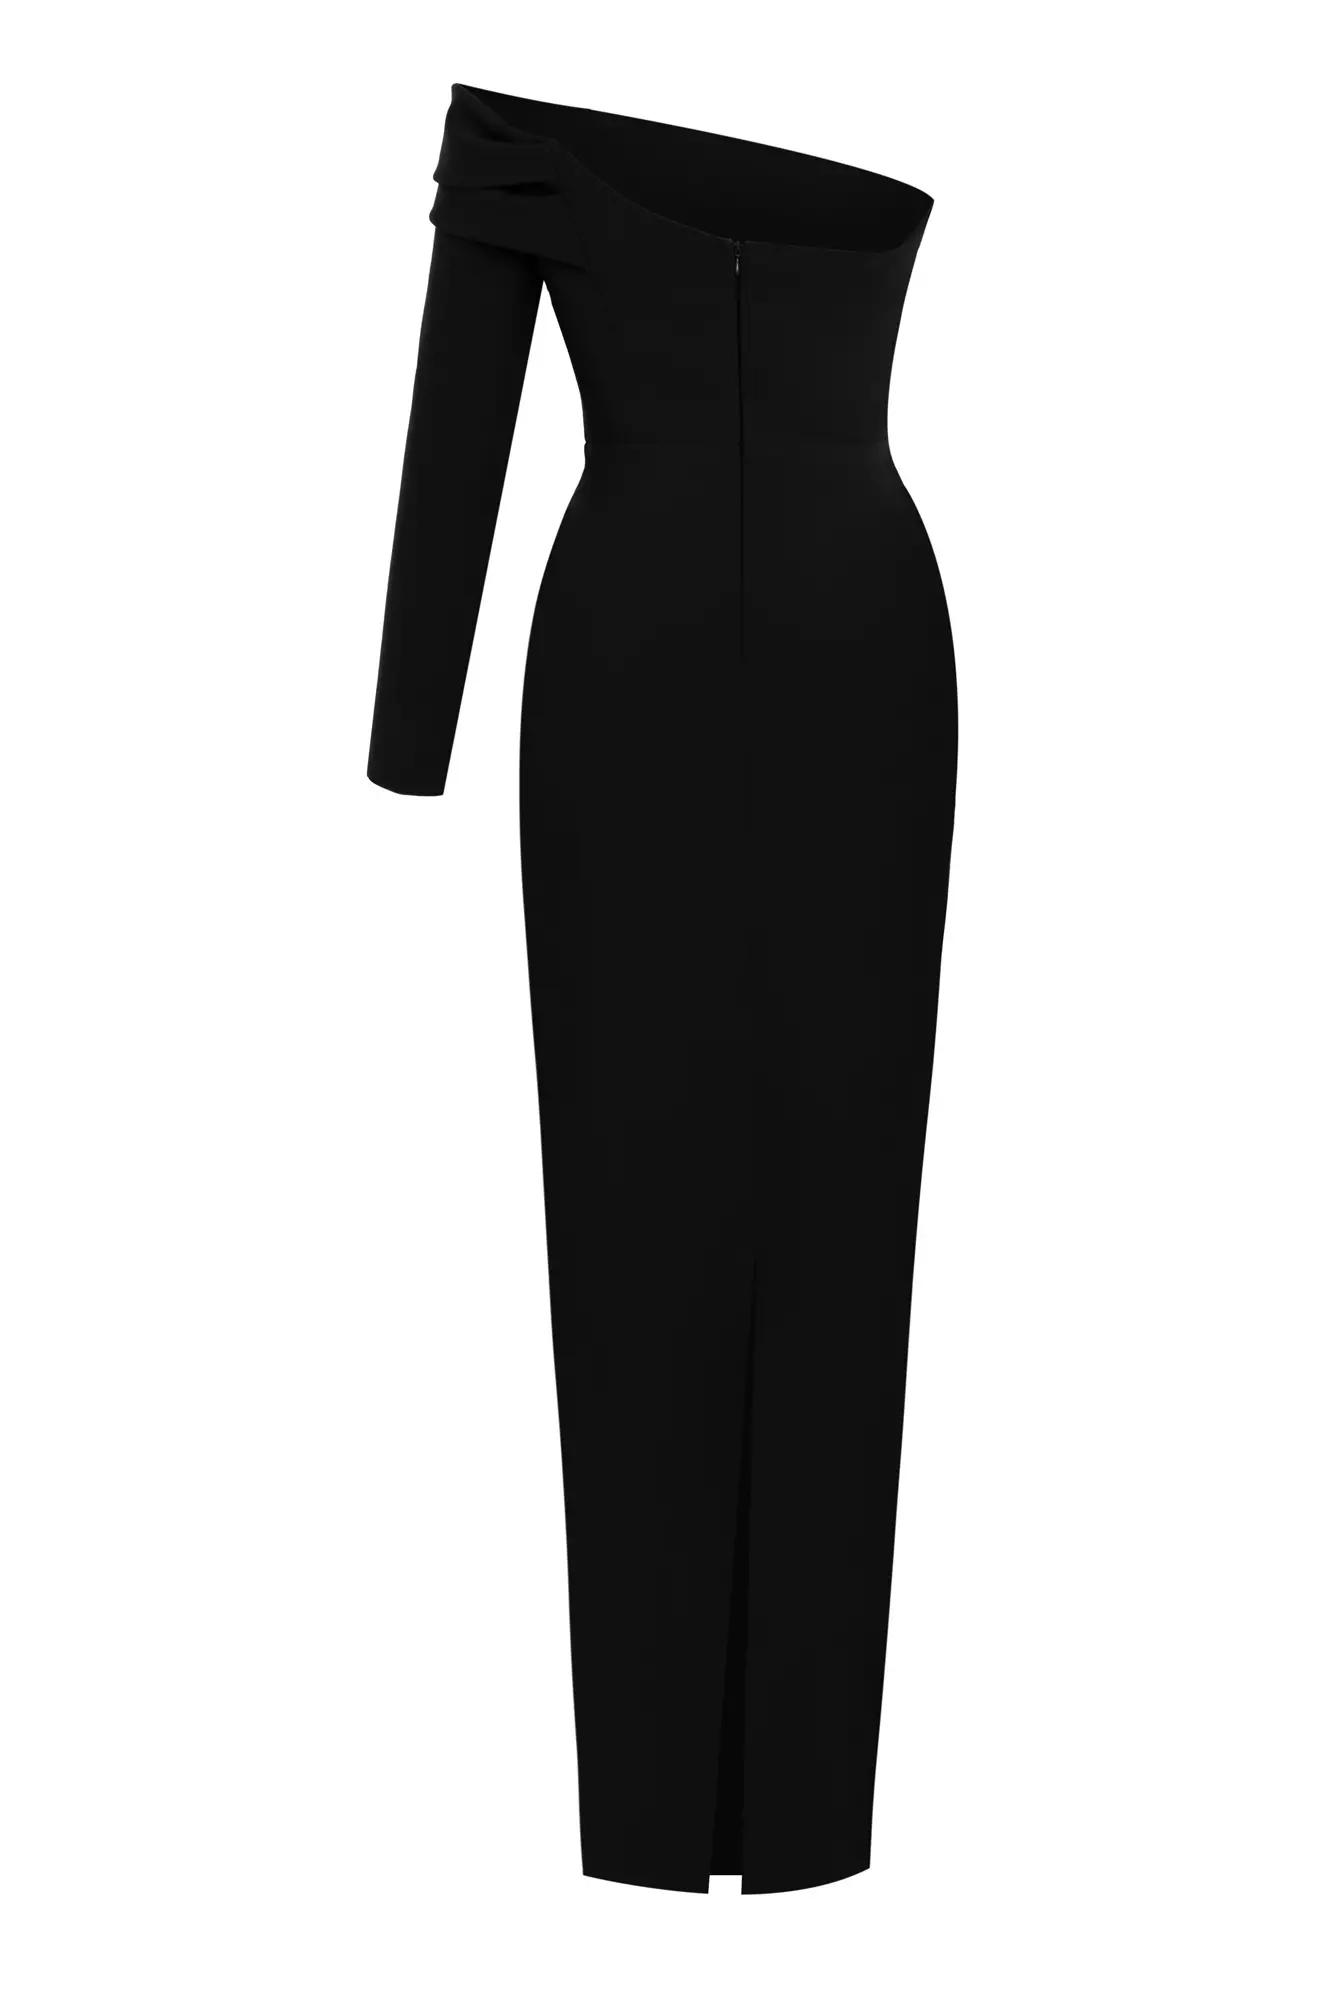 Black crepe one arm long dress